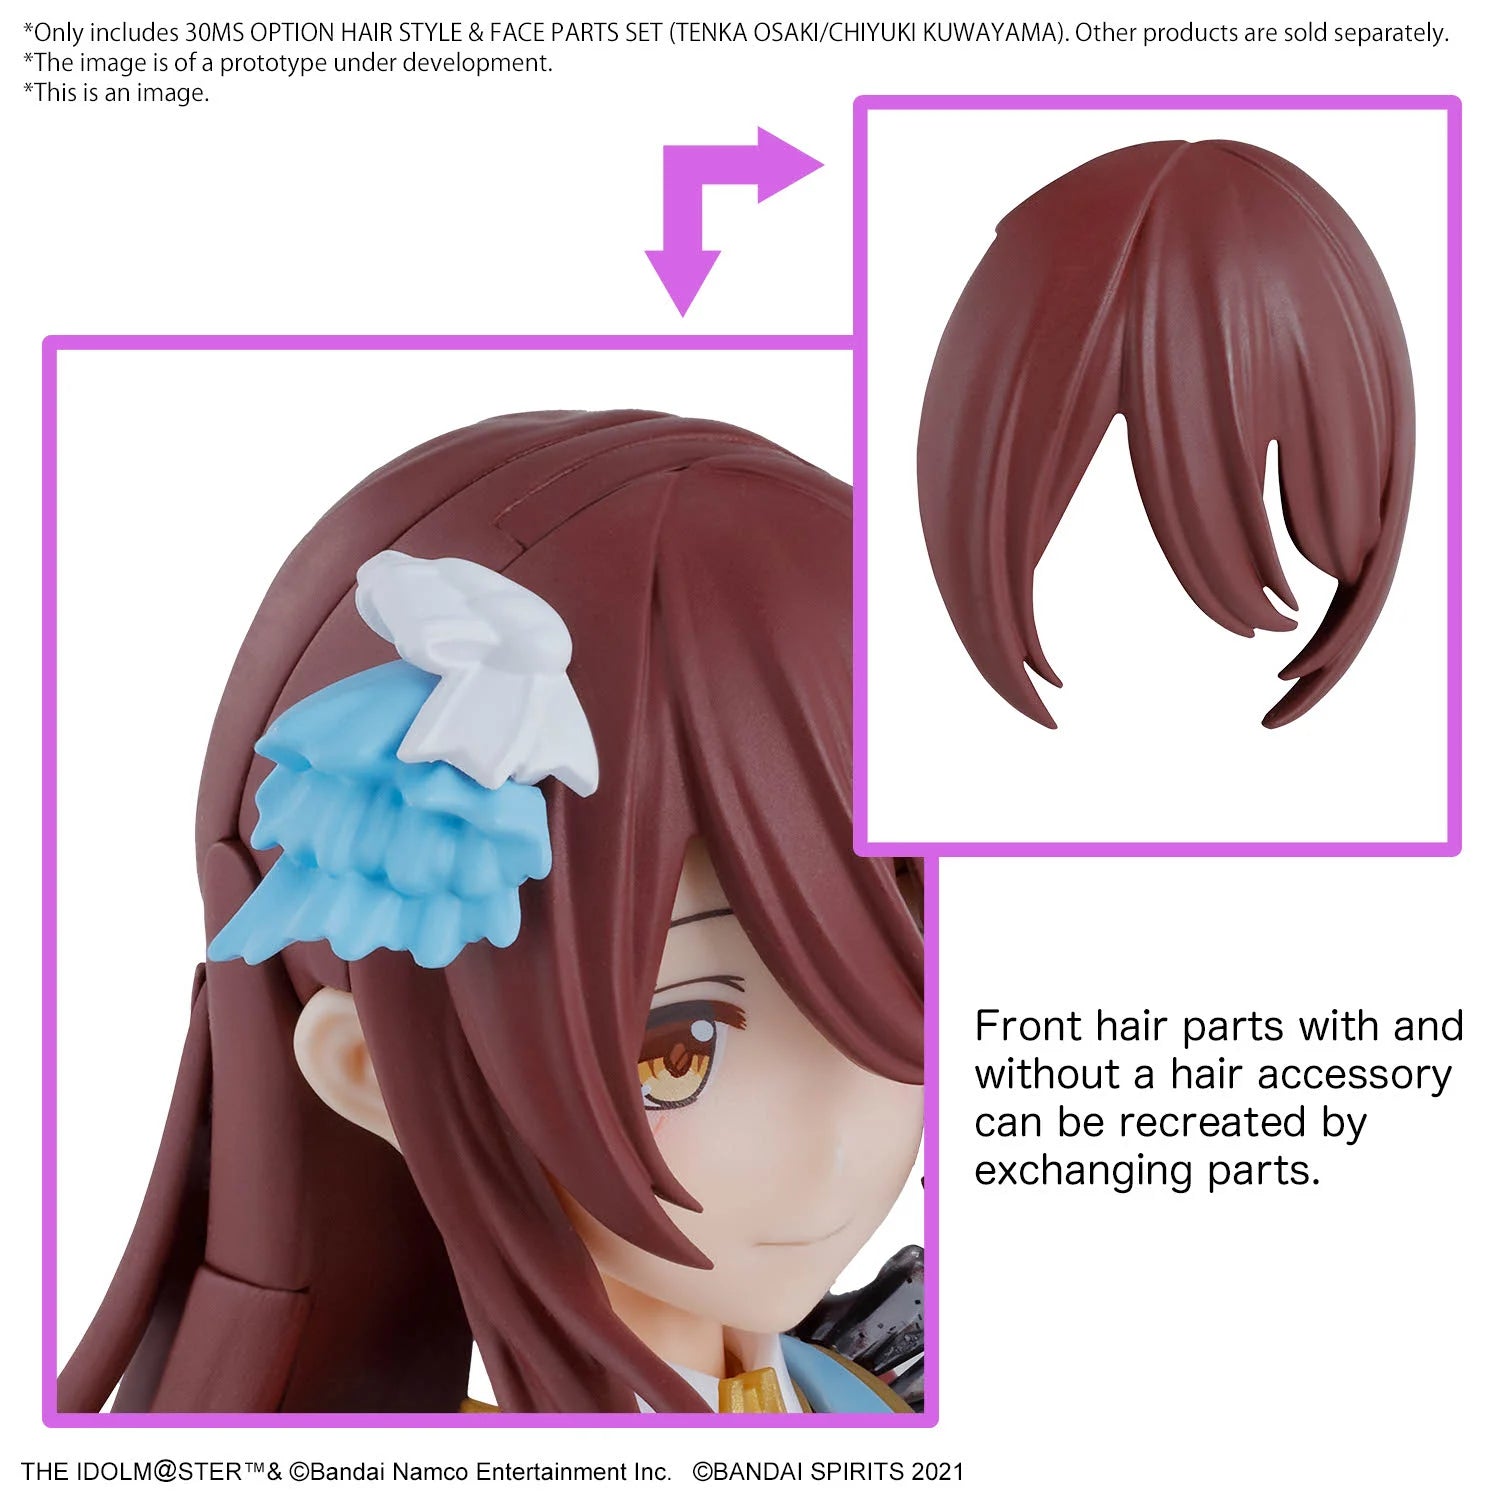 30MS - The Idolmaster Option hair style & Face Parts Set Tenka/Chiyuki - Model Kit